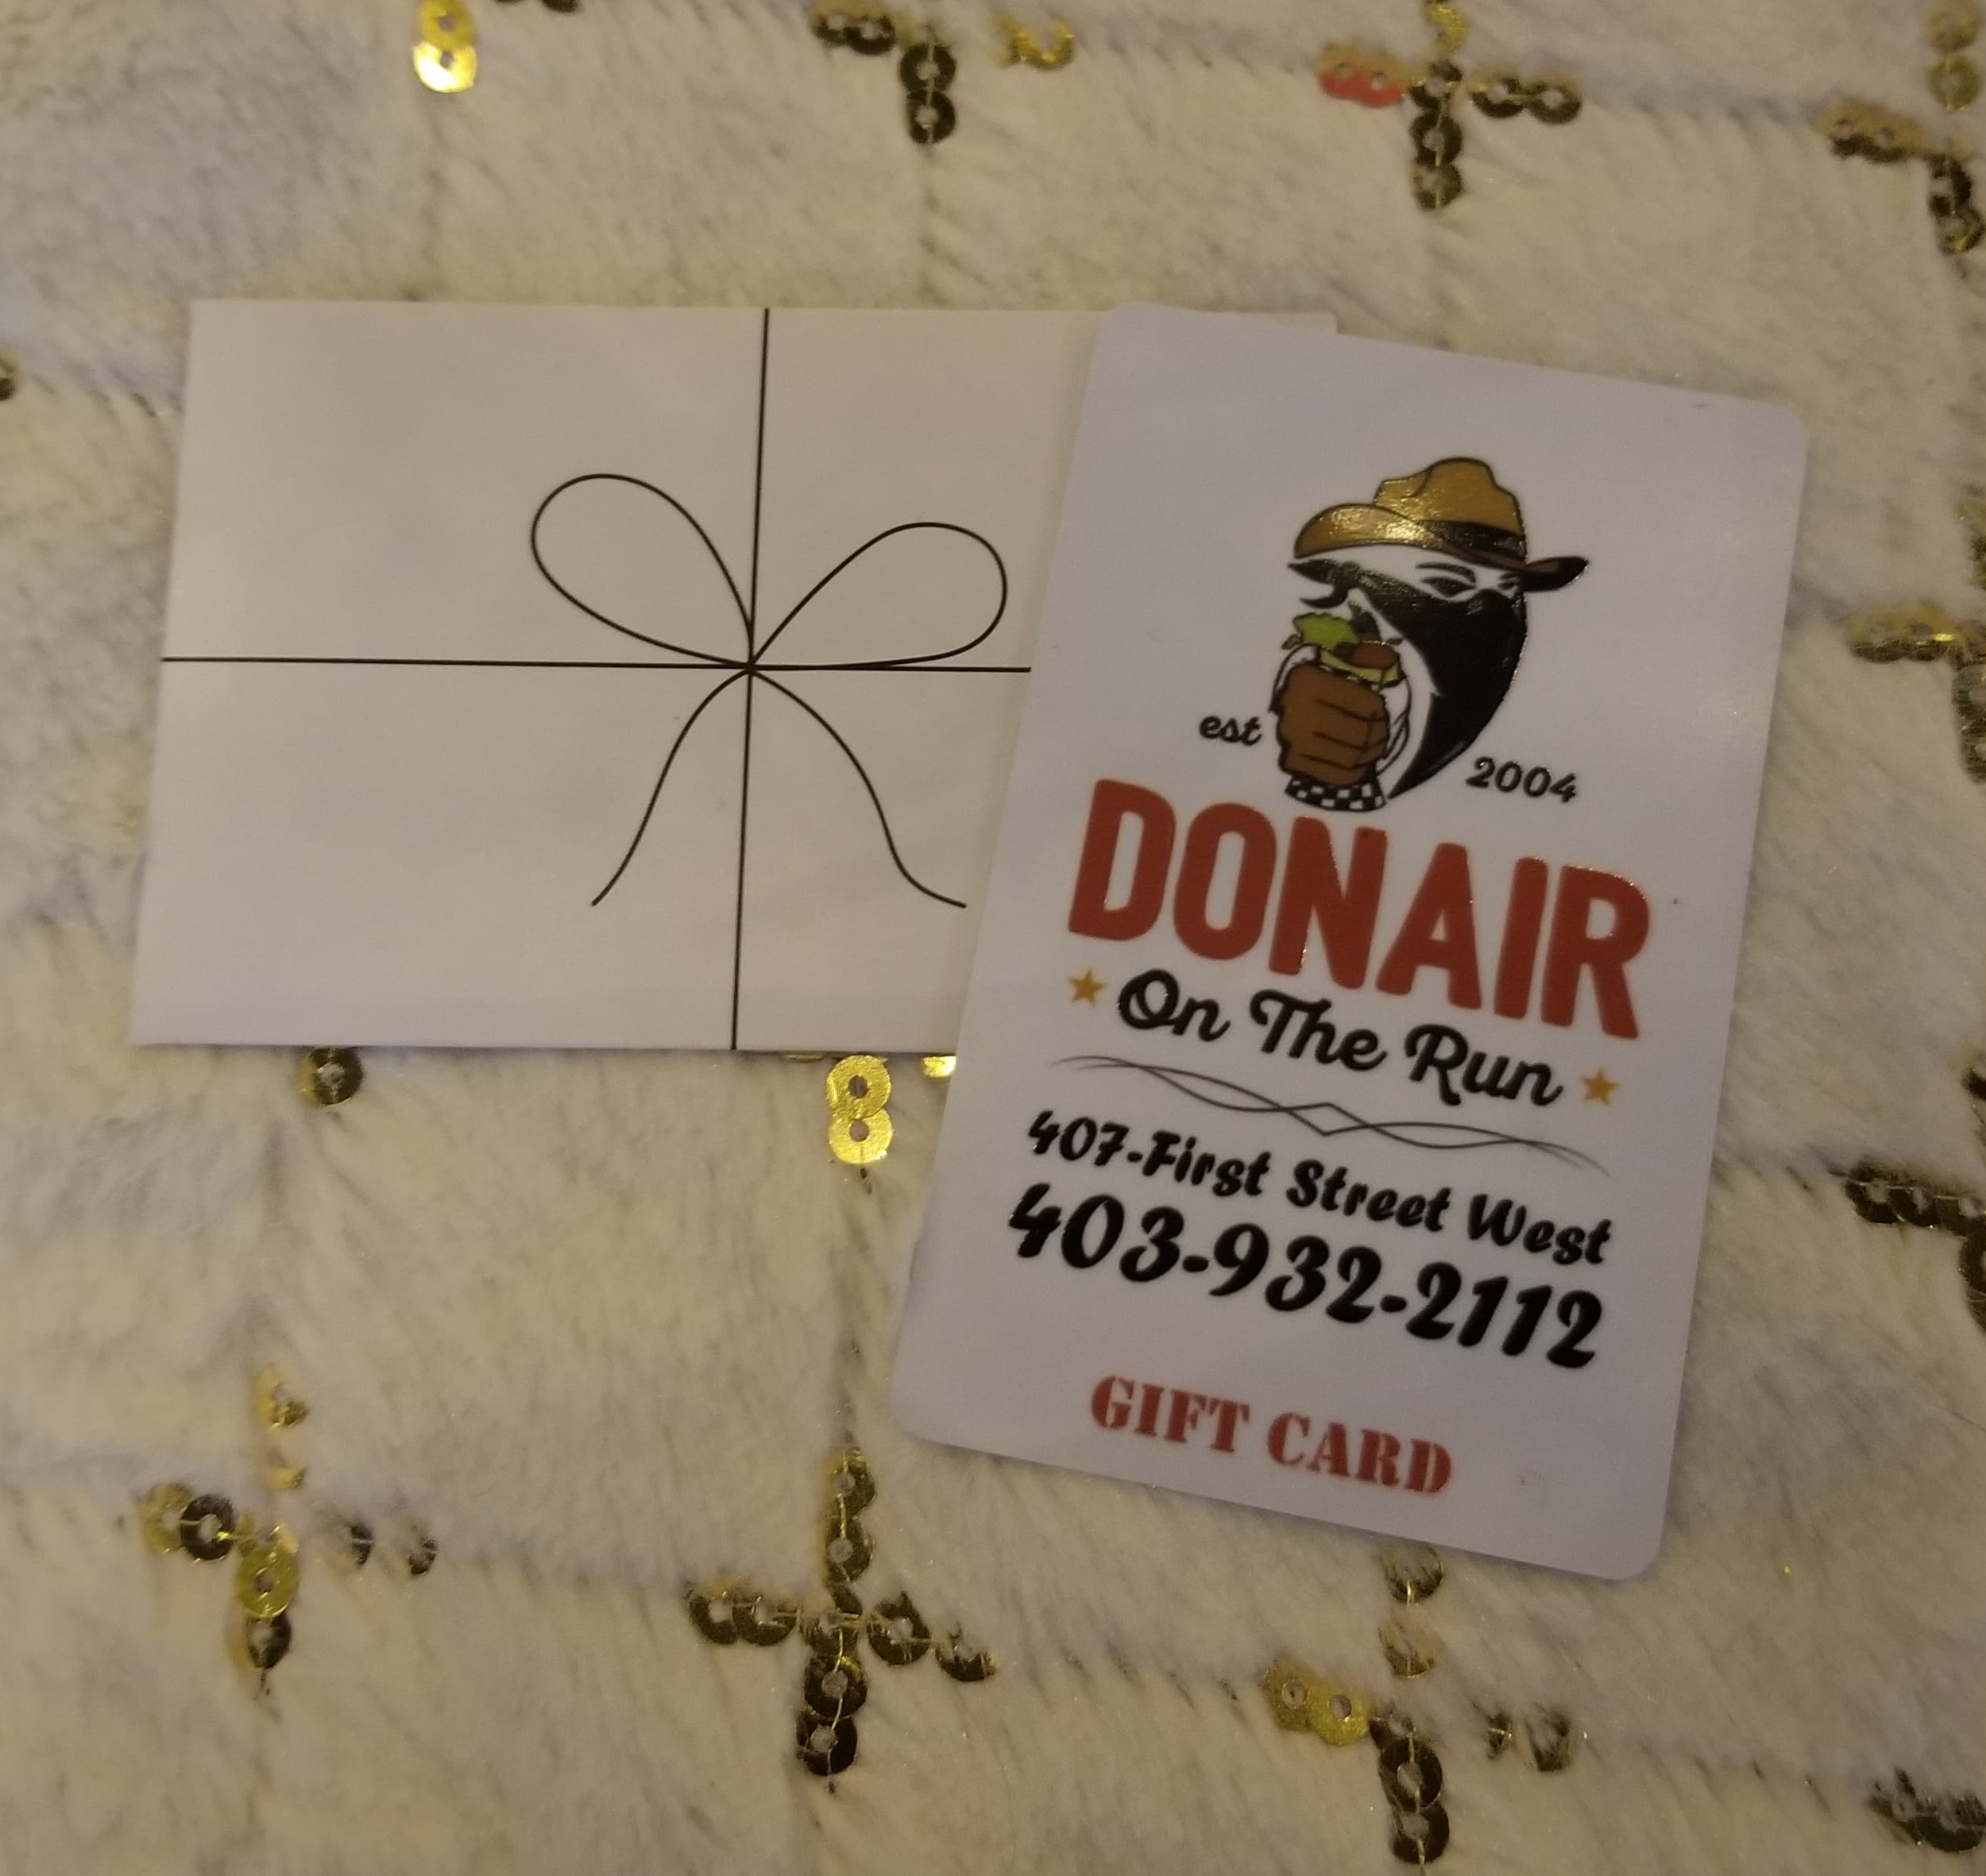 Donair on the Run - $25 Gift Card